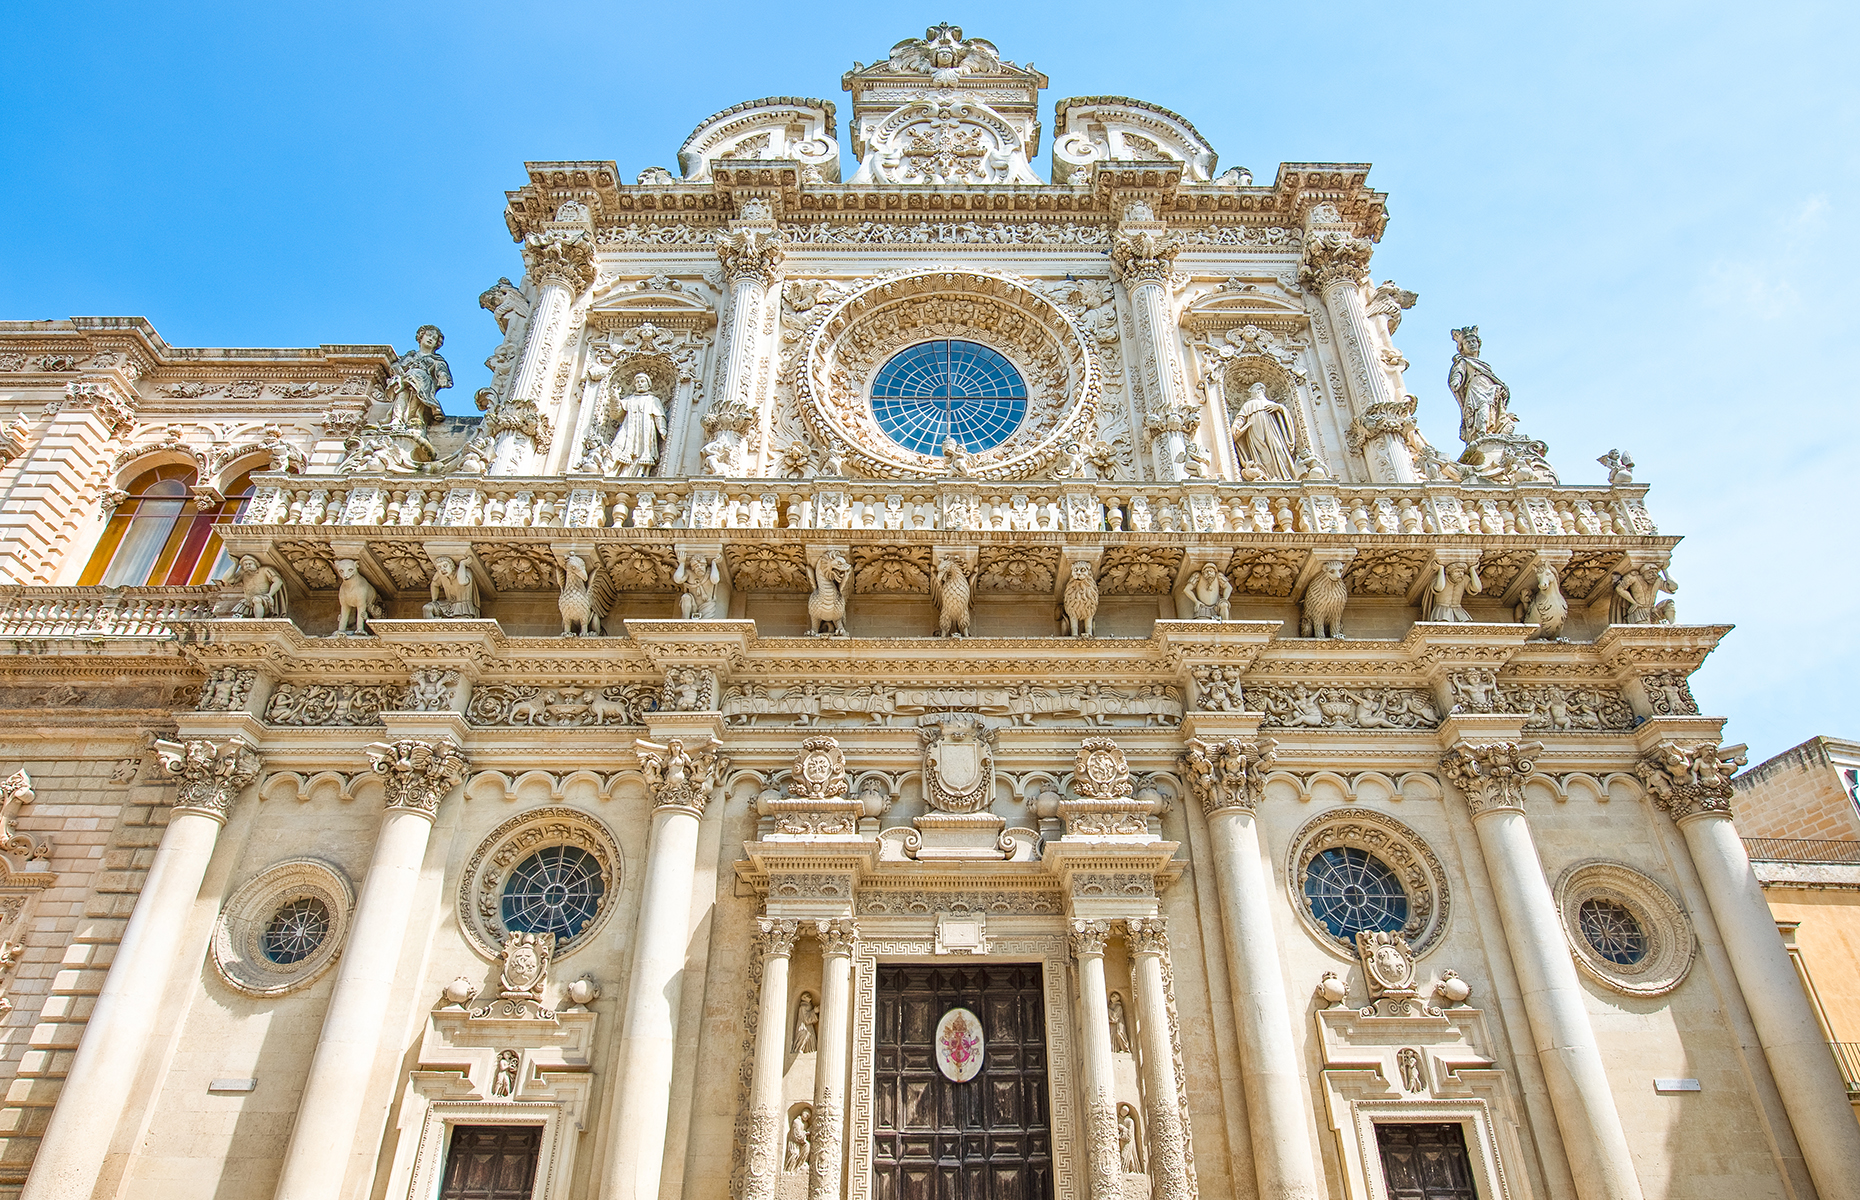 Basilica de Santa Croce, Lecce, Puglia, Italy (Image: Gimas/Shutterstock)